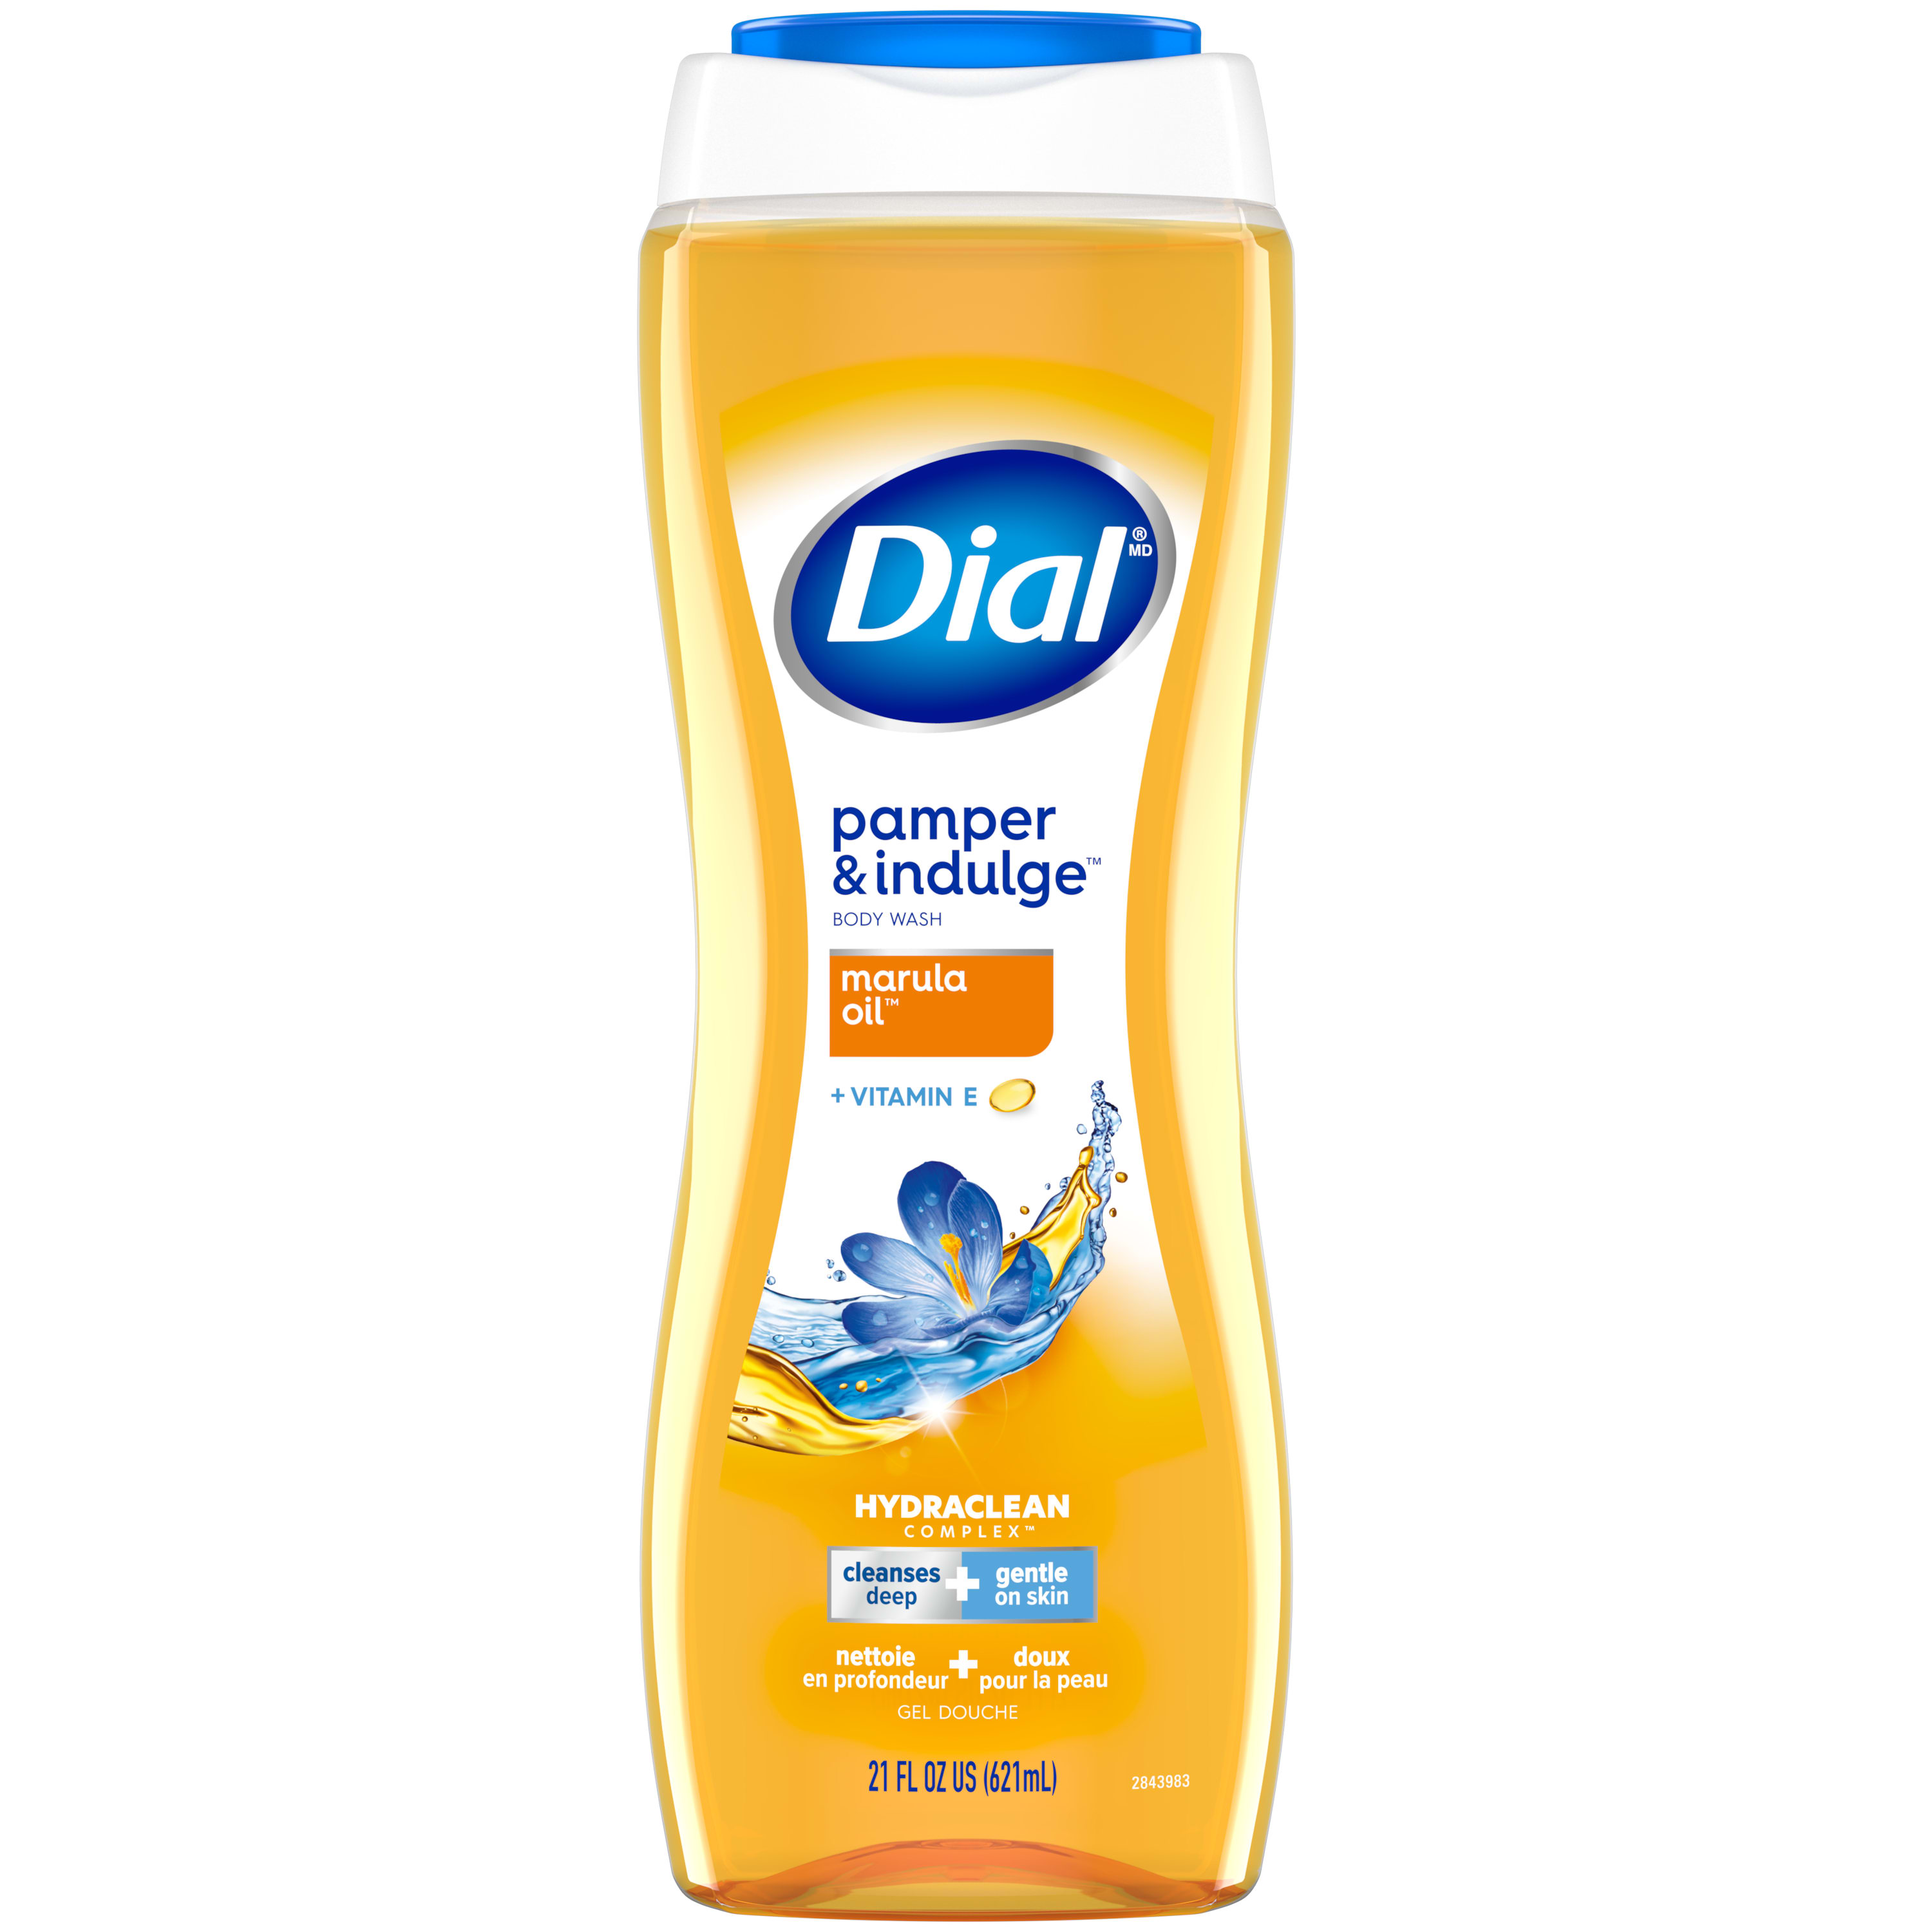 Dial Body Wash, Pamper & Indulge Marula Oil, 21 fl oz - image 1 of 11